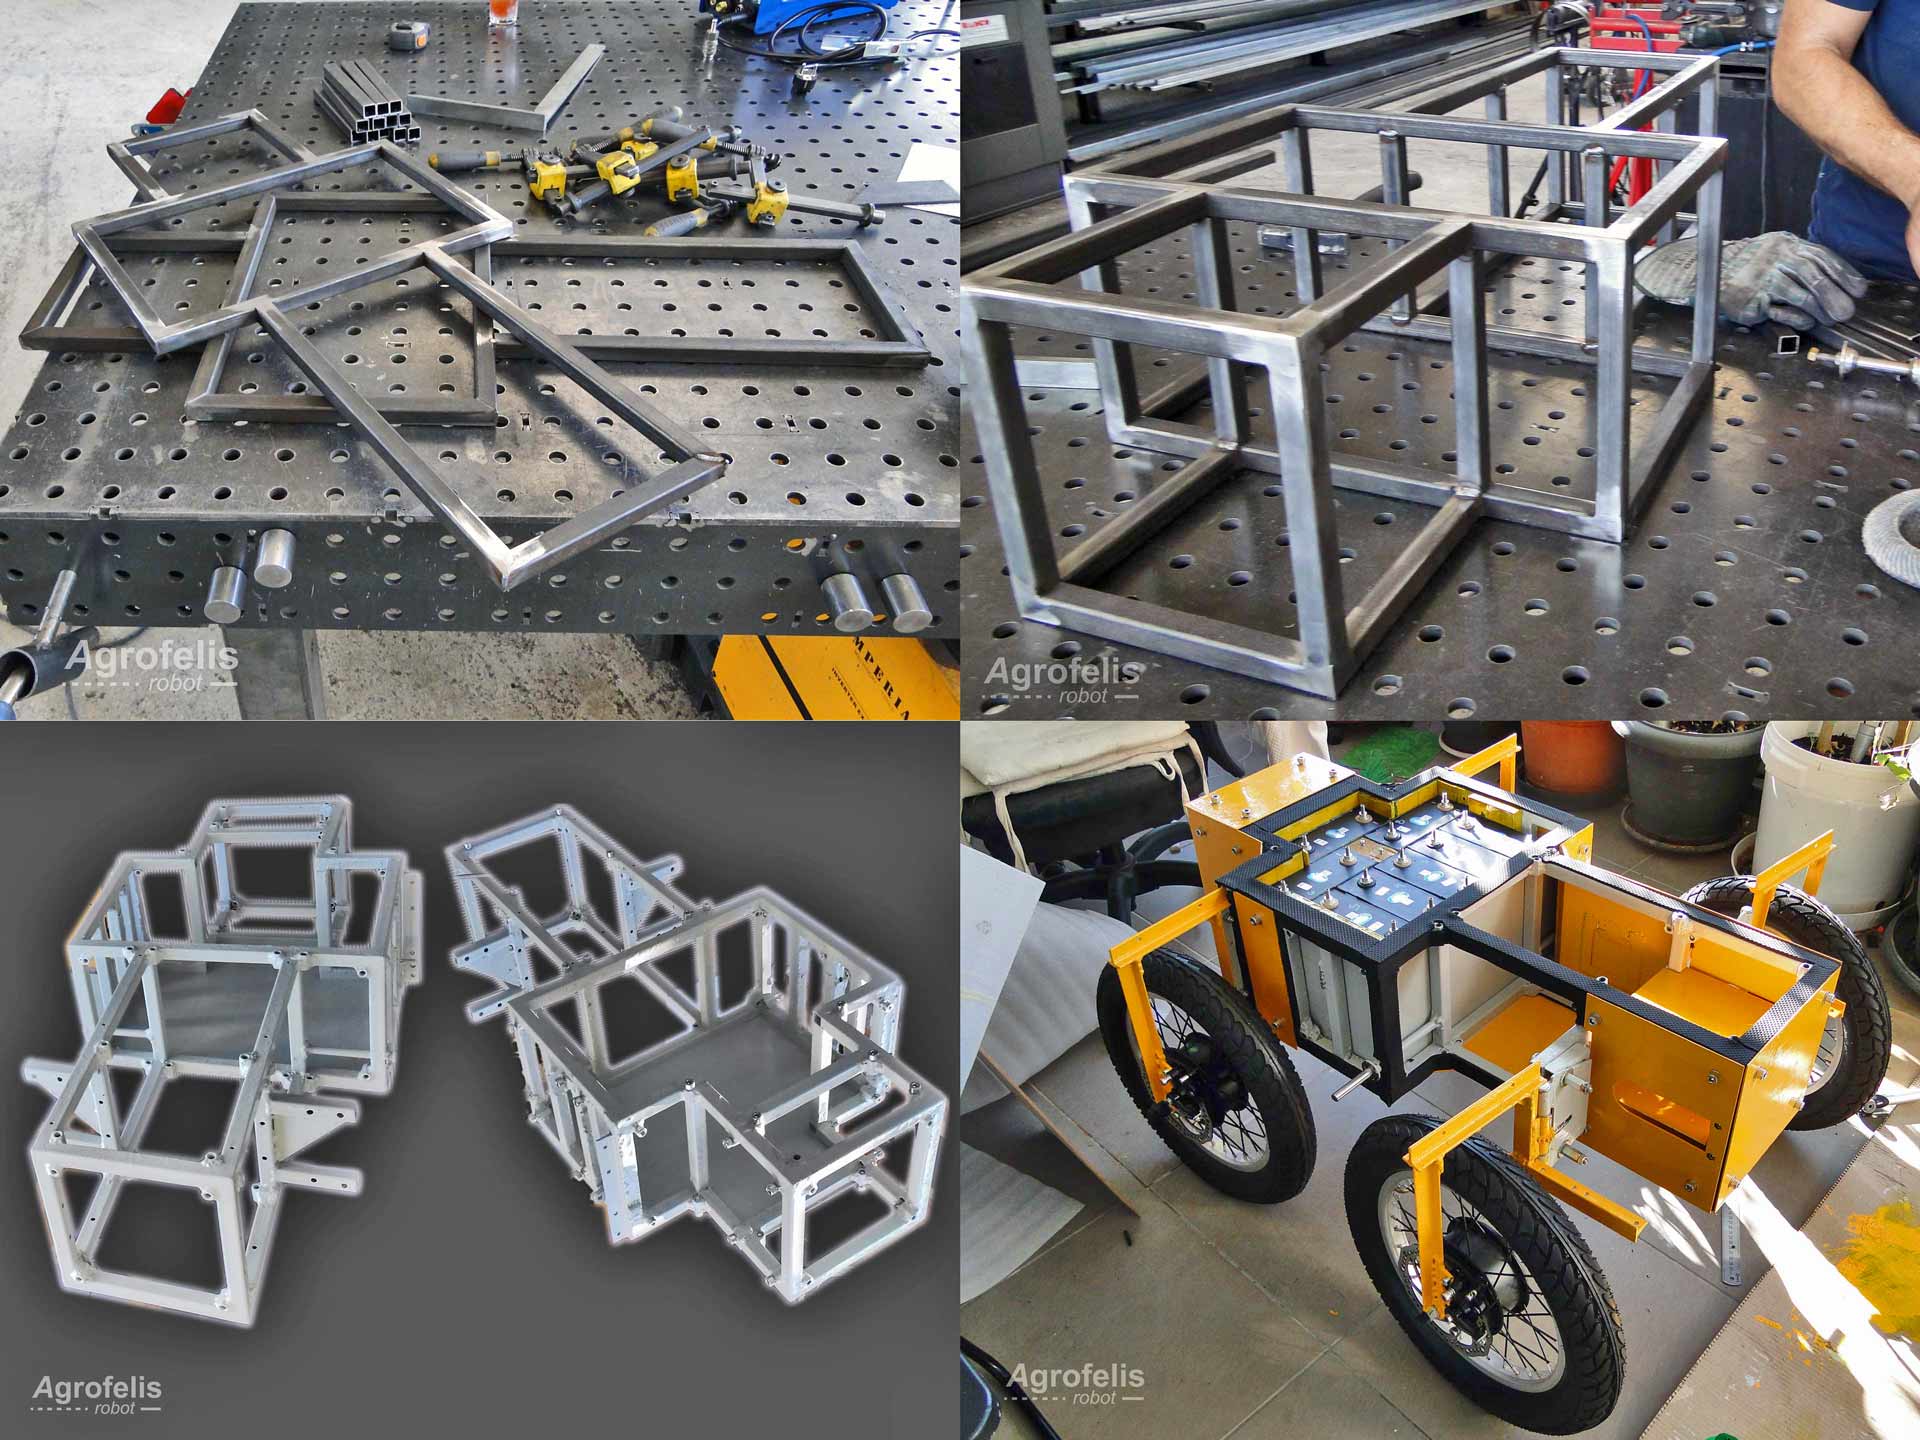 Agrofelis chassis frame design and fabrication figures highlights